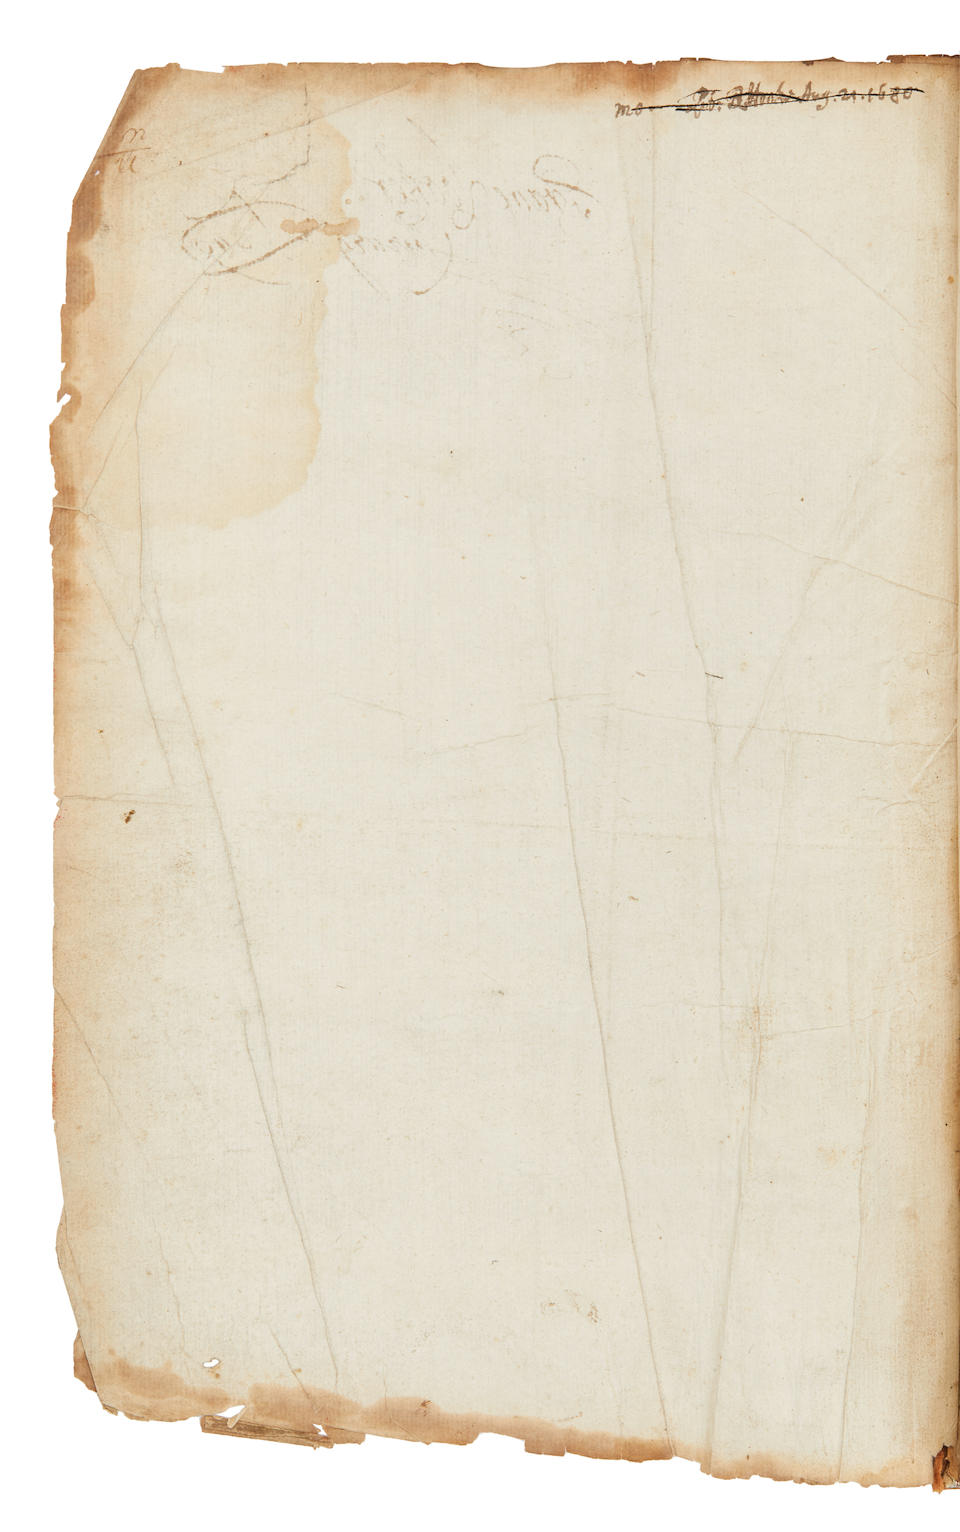 ROBERT HOOKE'S COPY OF VESALIUS, RECORDED IN HIS DIARY. VESALIUS, ANDREAS. 1514-1564. De humani corporis fabrica.  Venice: Franciscus Francisci and Johannes Criegher, 1568. 2 parts in one volume.